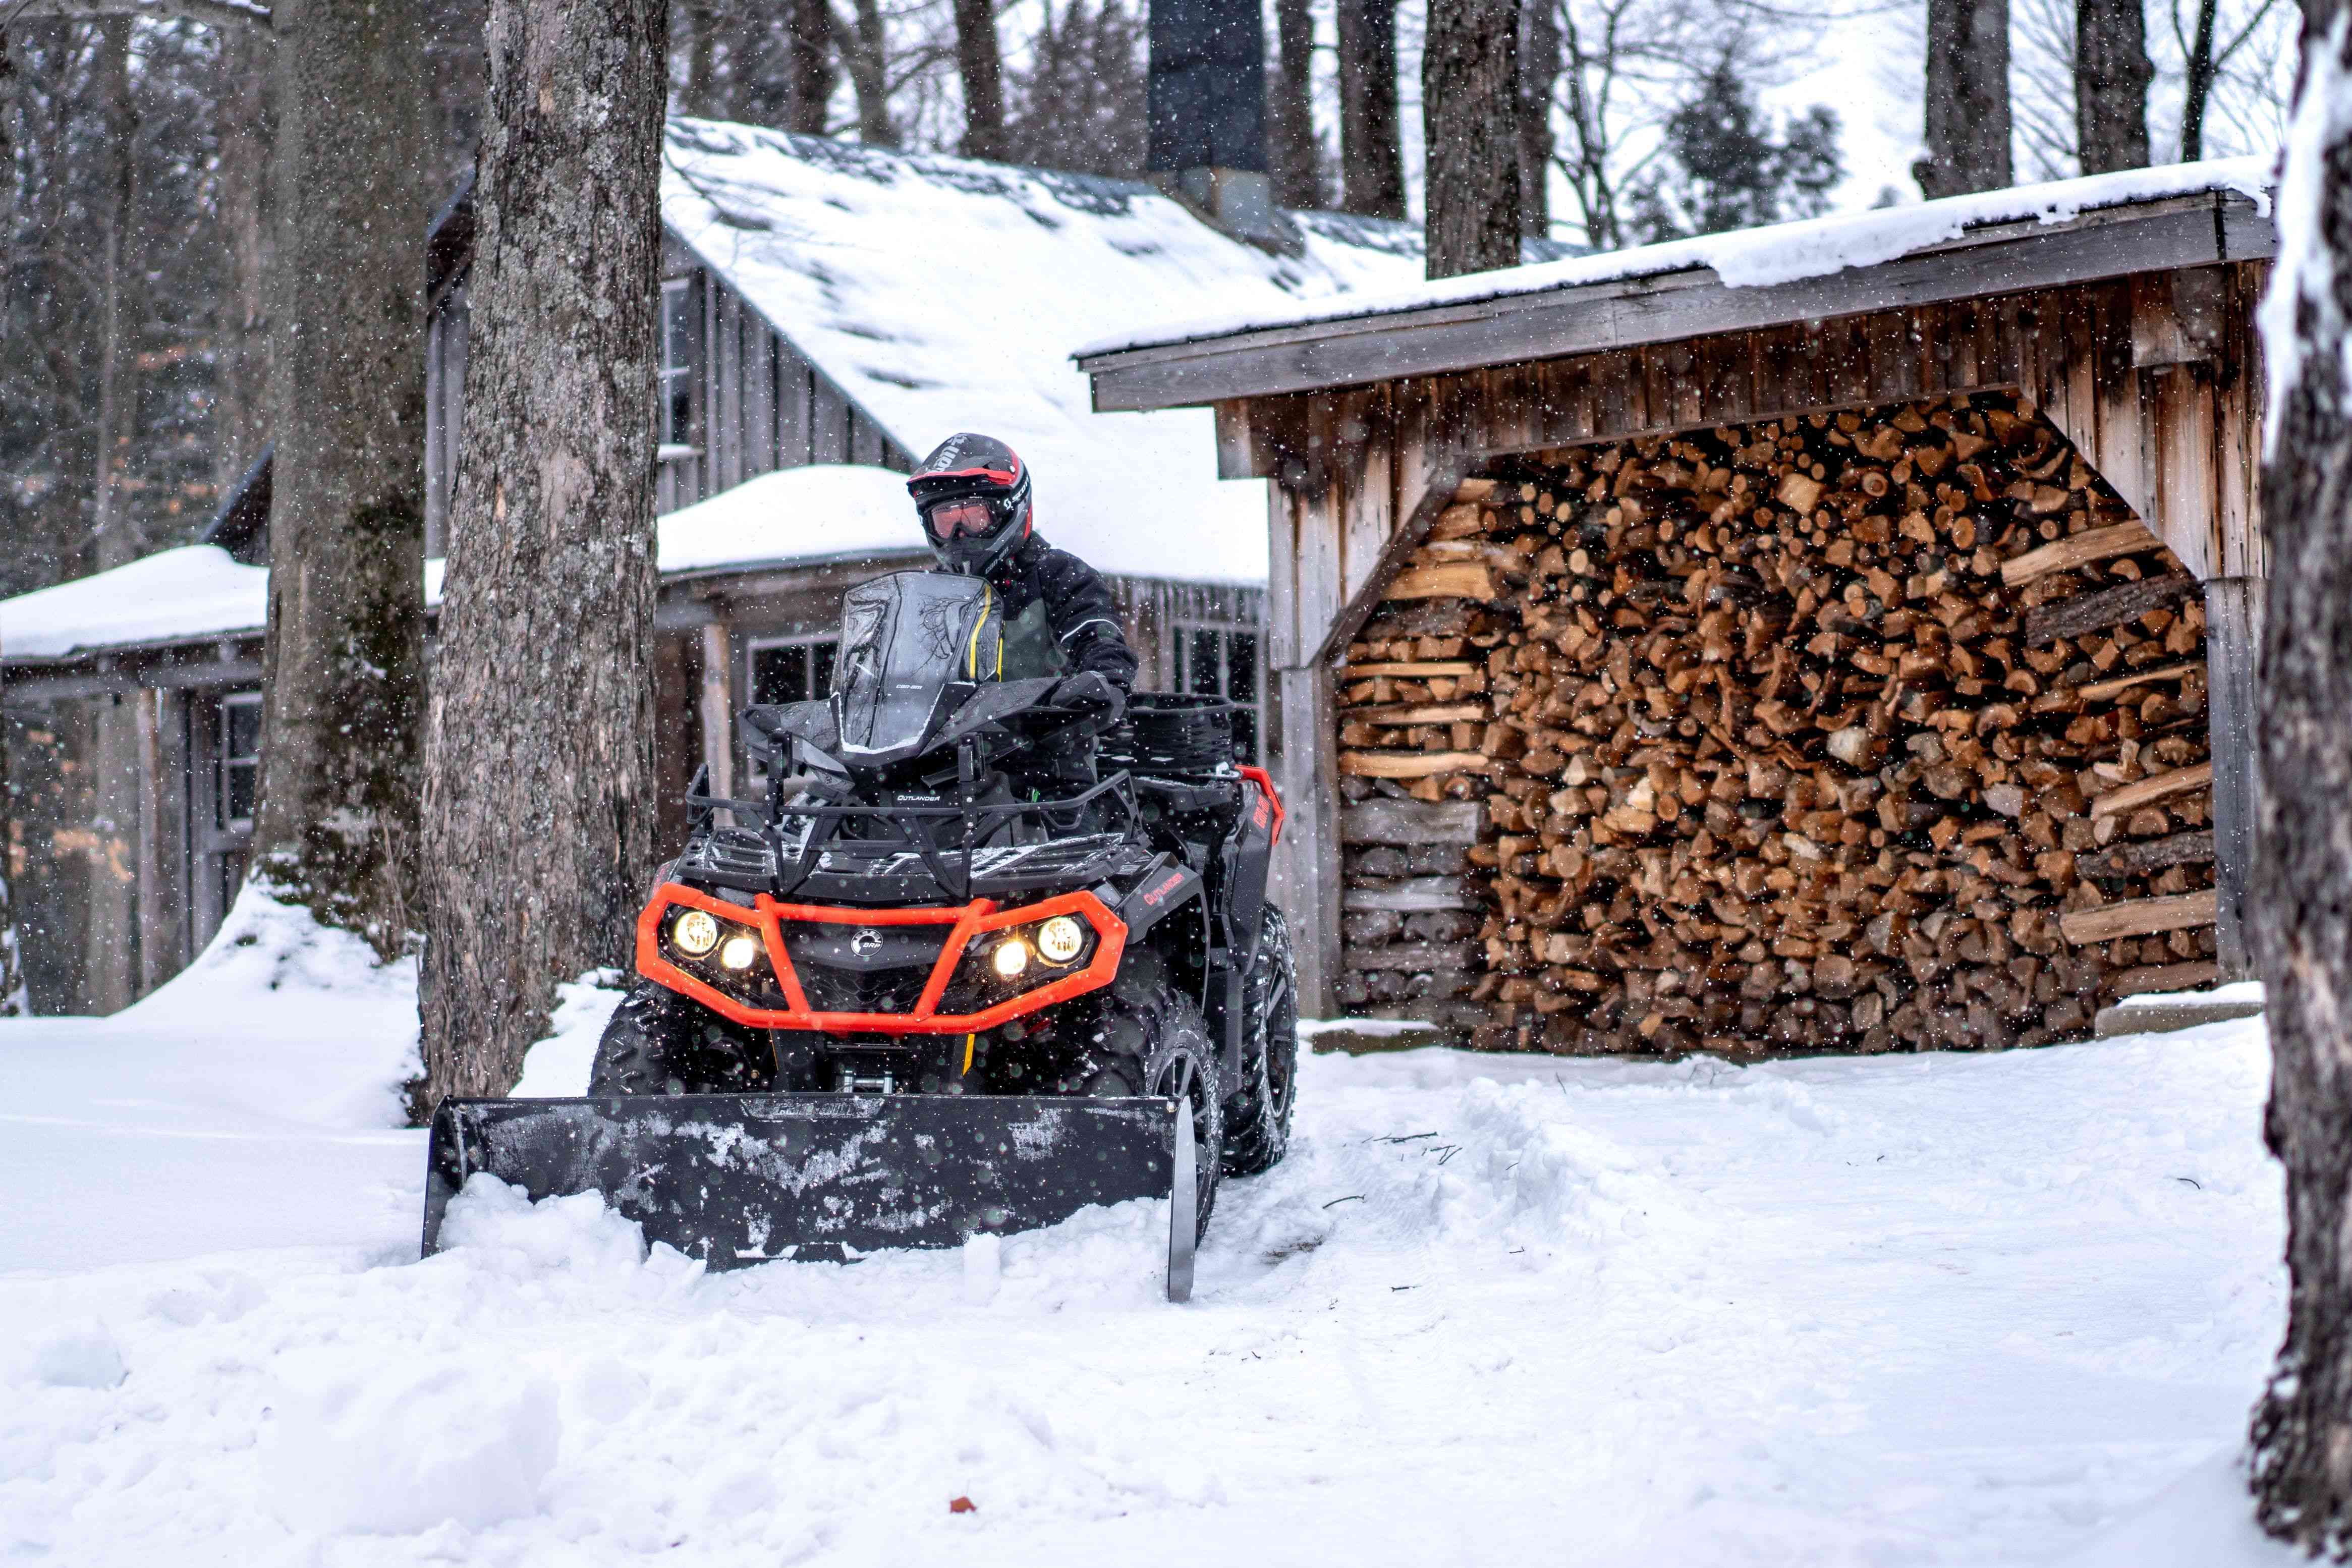 ATV rider enjoying winter adventure near cozy cabin